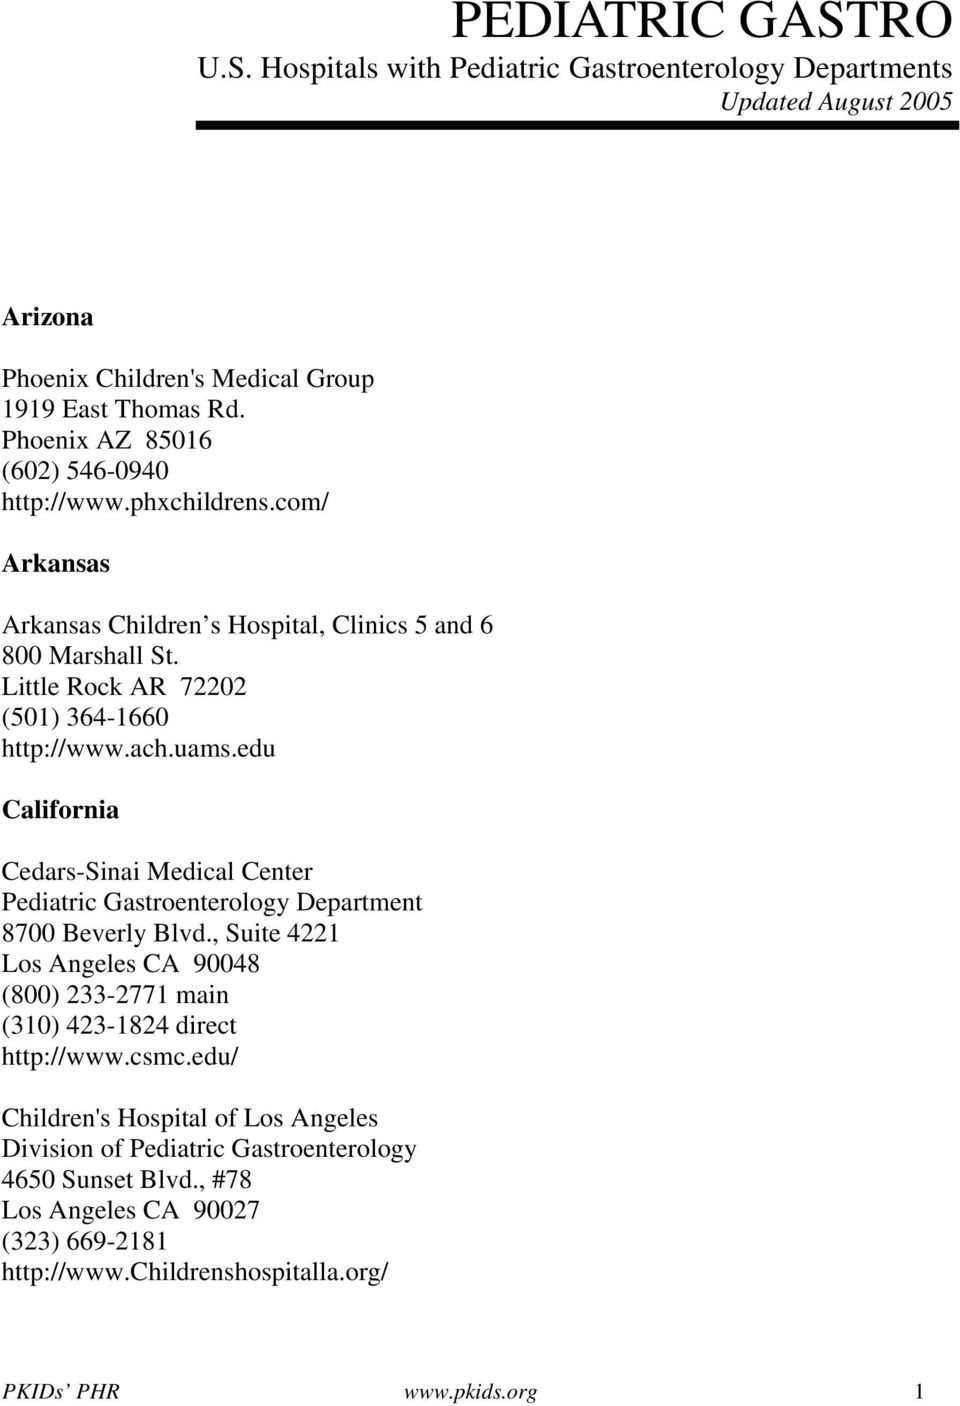 edu California Cedars-Sinai Medical Center Pediatric Gastroenterology Department 8700 Beverly Blvd., Suite 4221 Los Angeles CA 90048 (800) 233-2771 main (310) 423-1824 direct http://www.csmc.